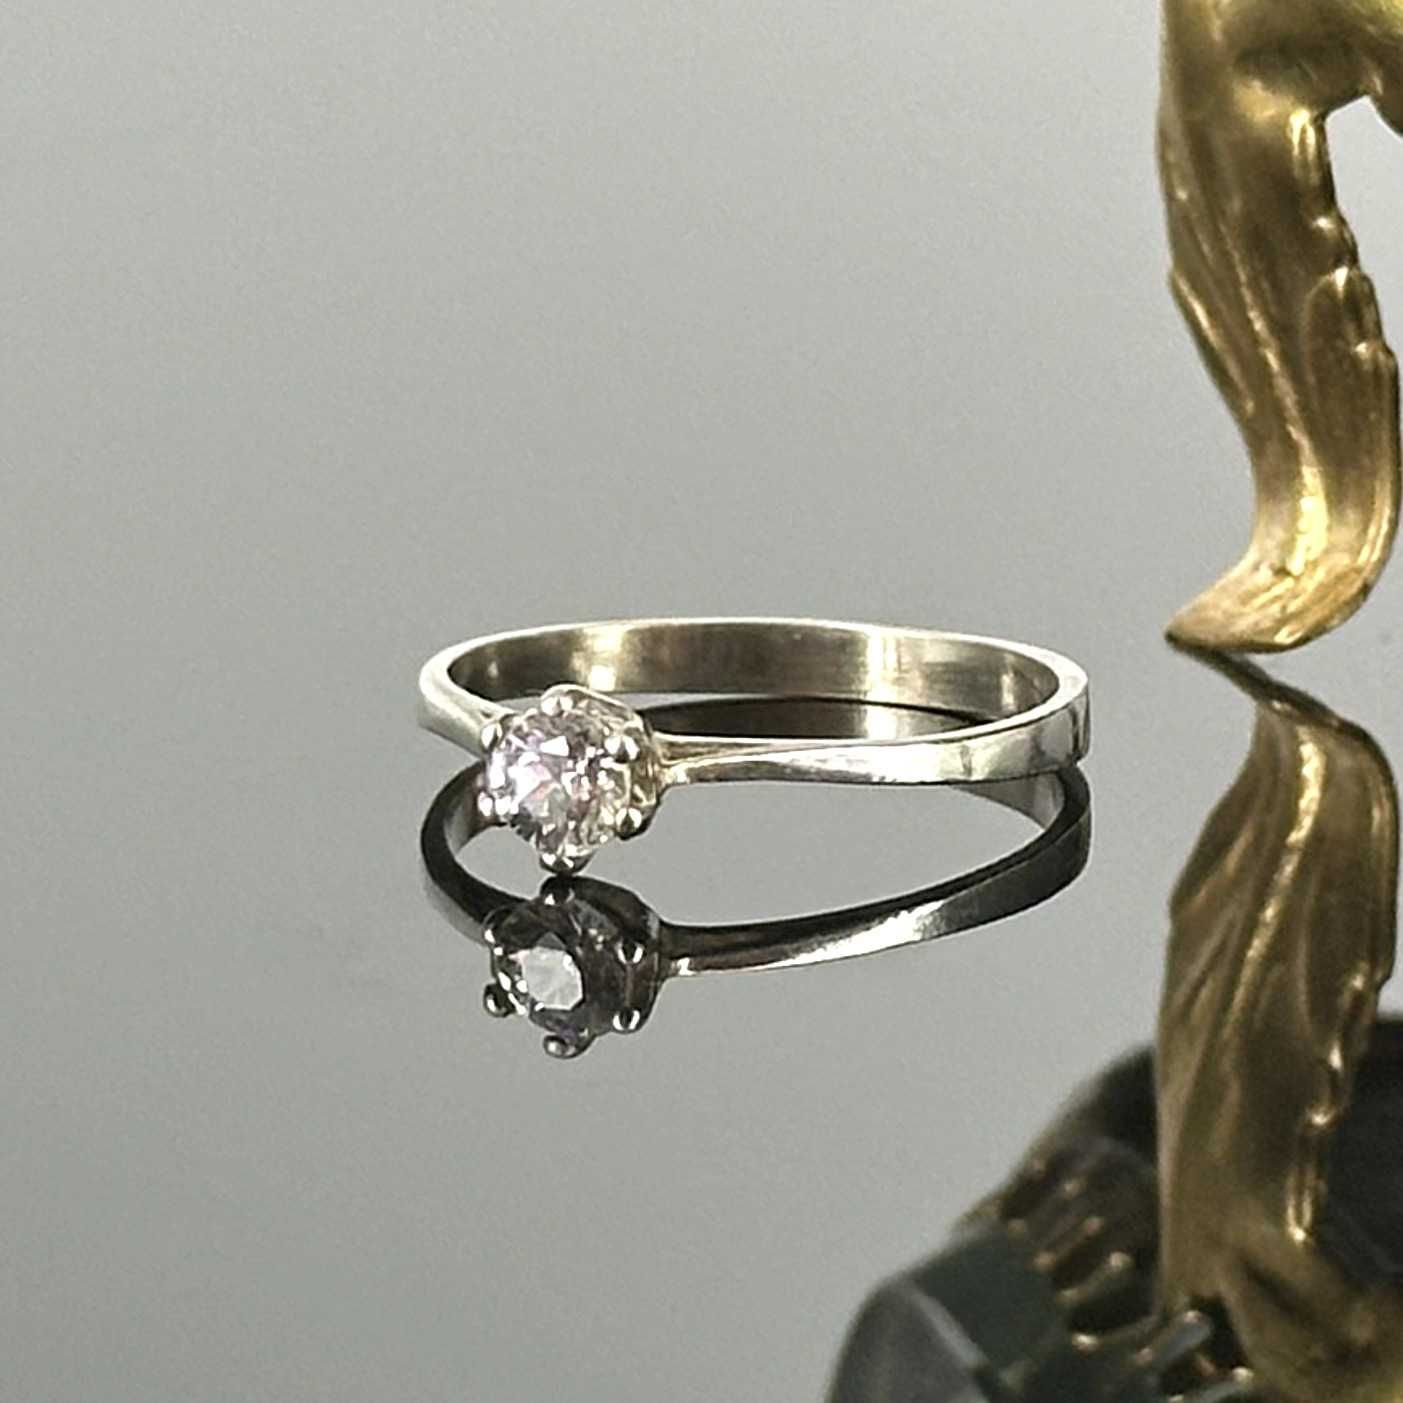 Srebro - Srebrny pierścionek z Cyrkonią - próba srebra 800